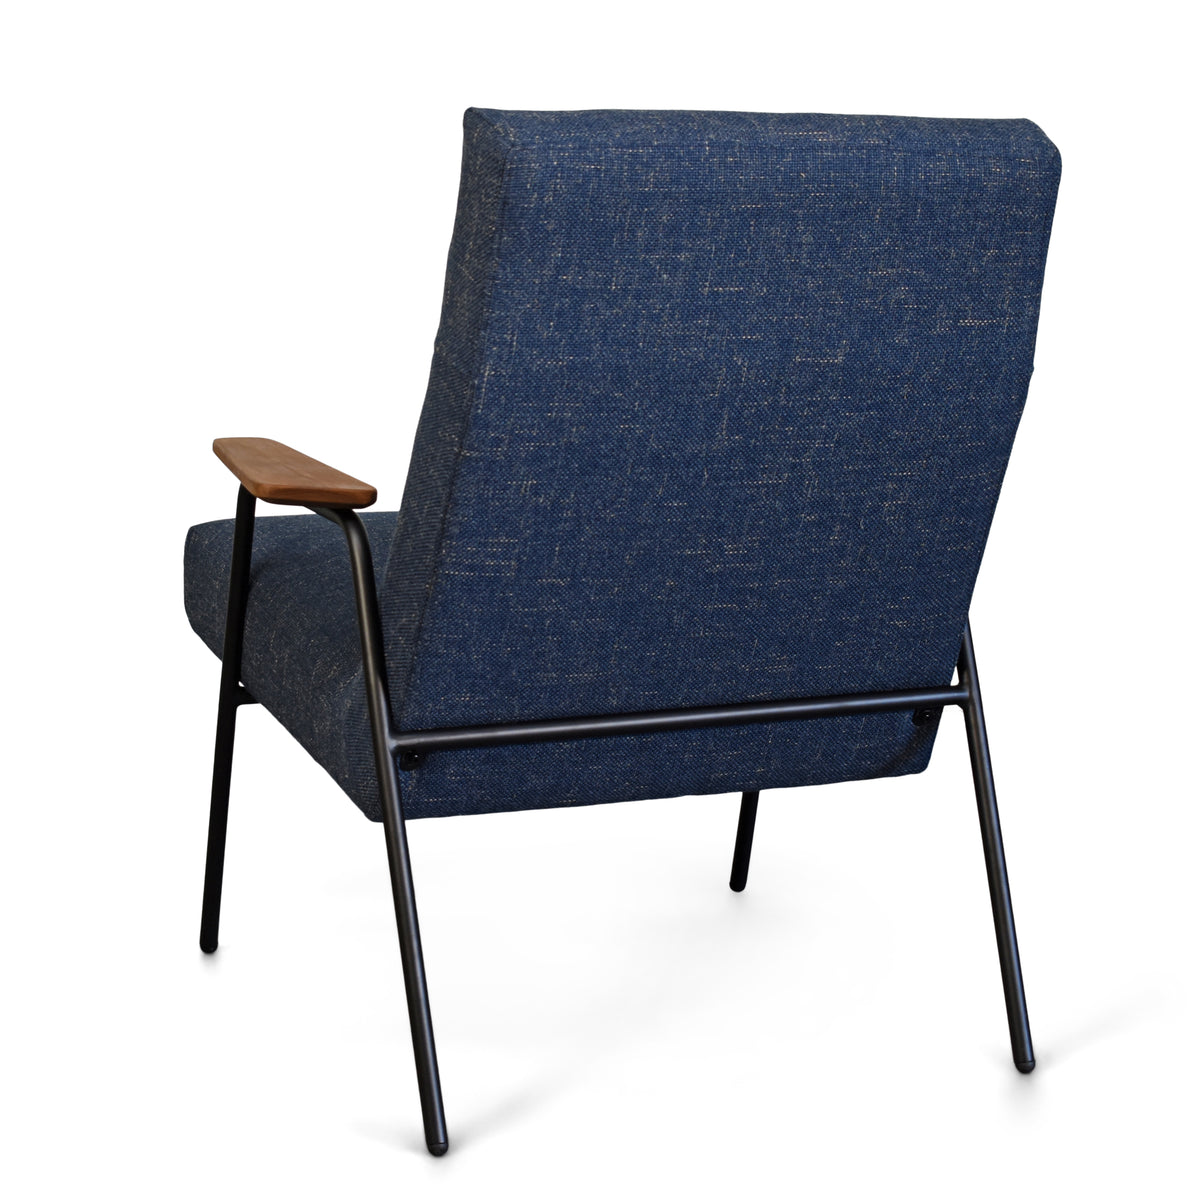 Melbourne Modern Lounge Chair from Gingko - Gingko Furniture